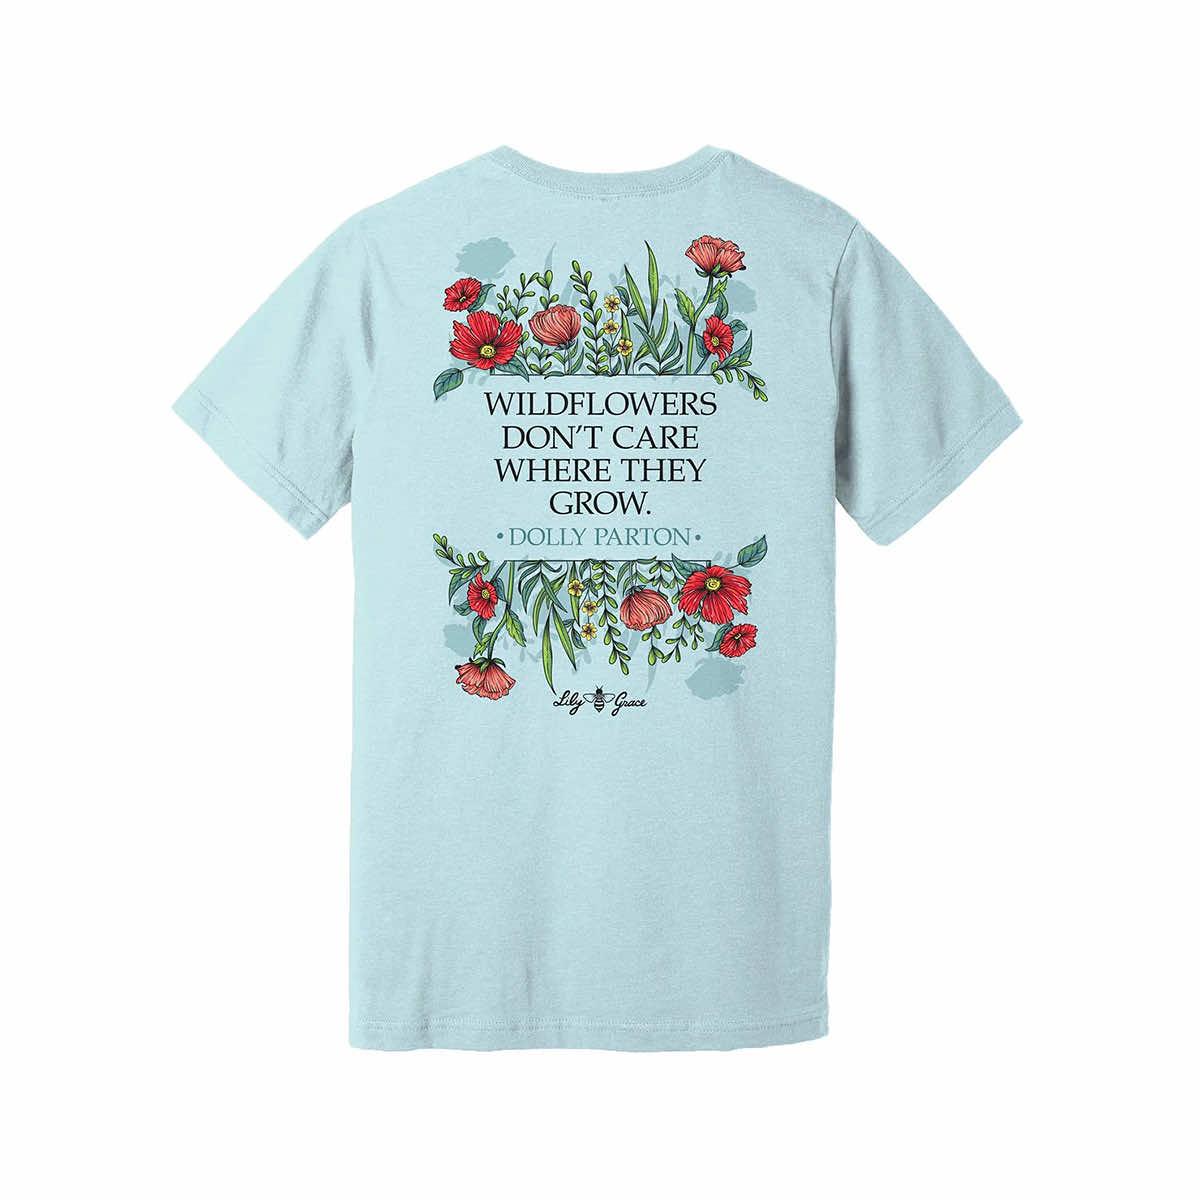  Women's Dolly Parton Wildflowers Short Sleeve T- Shirt